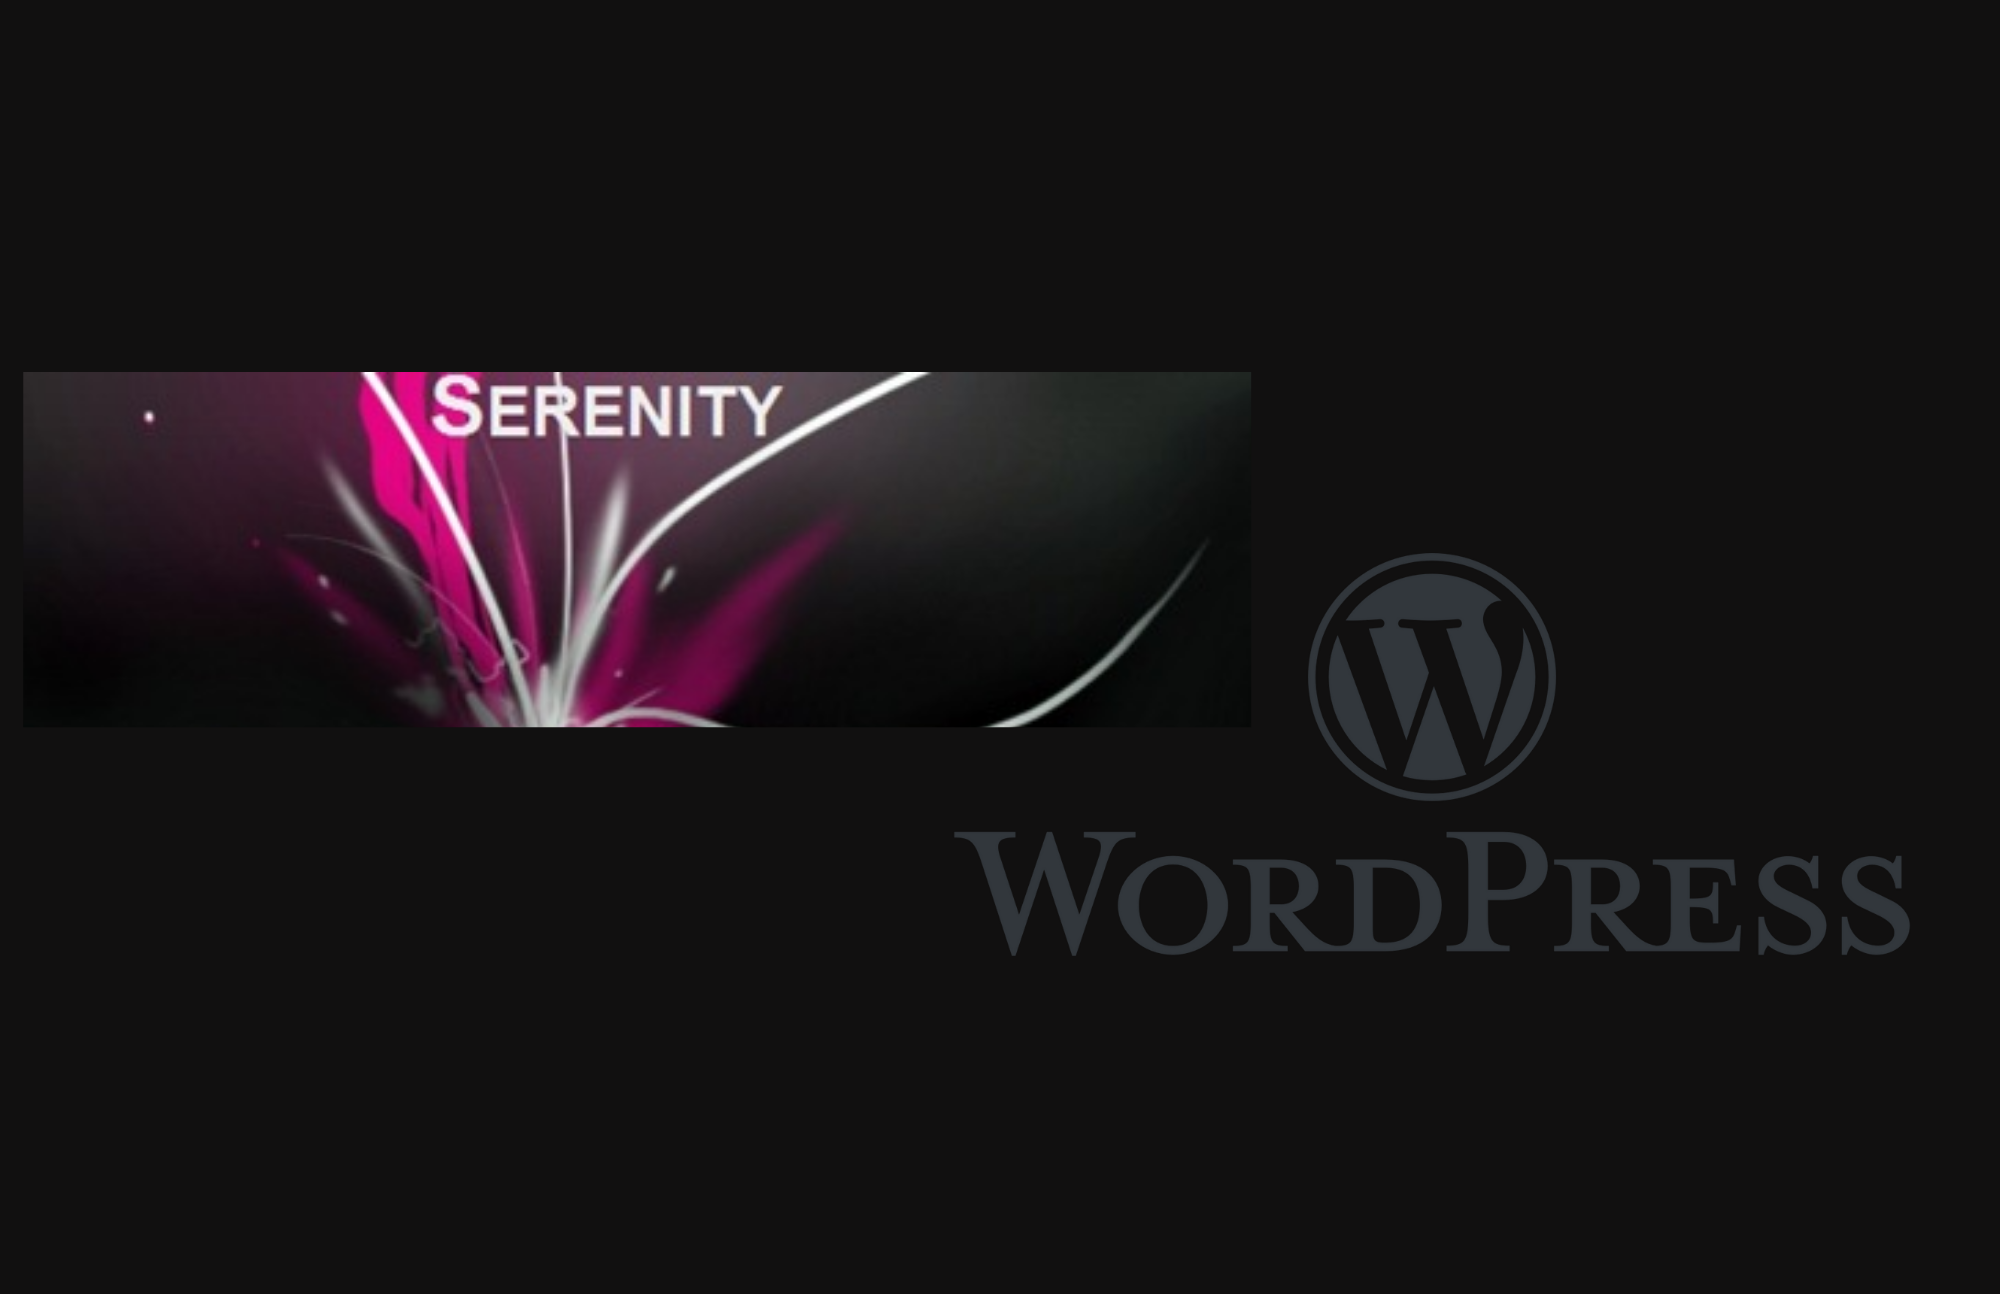 The logo of Serenity and WordPress